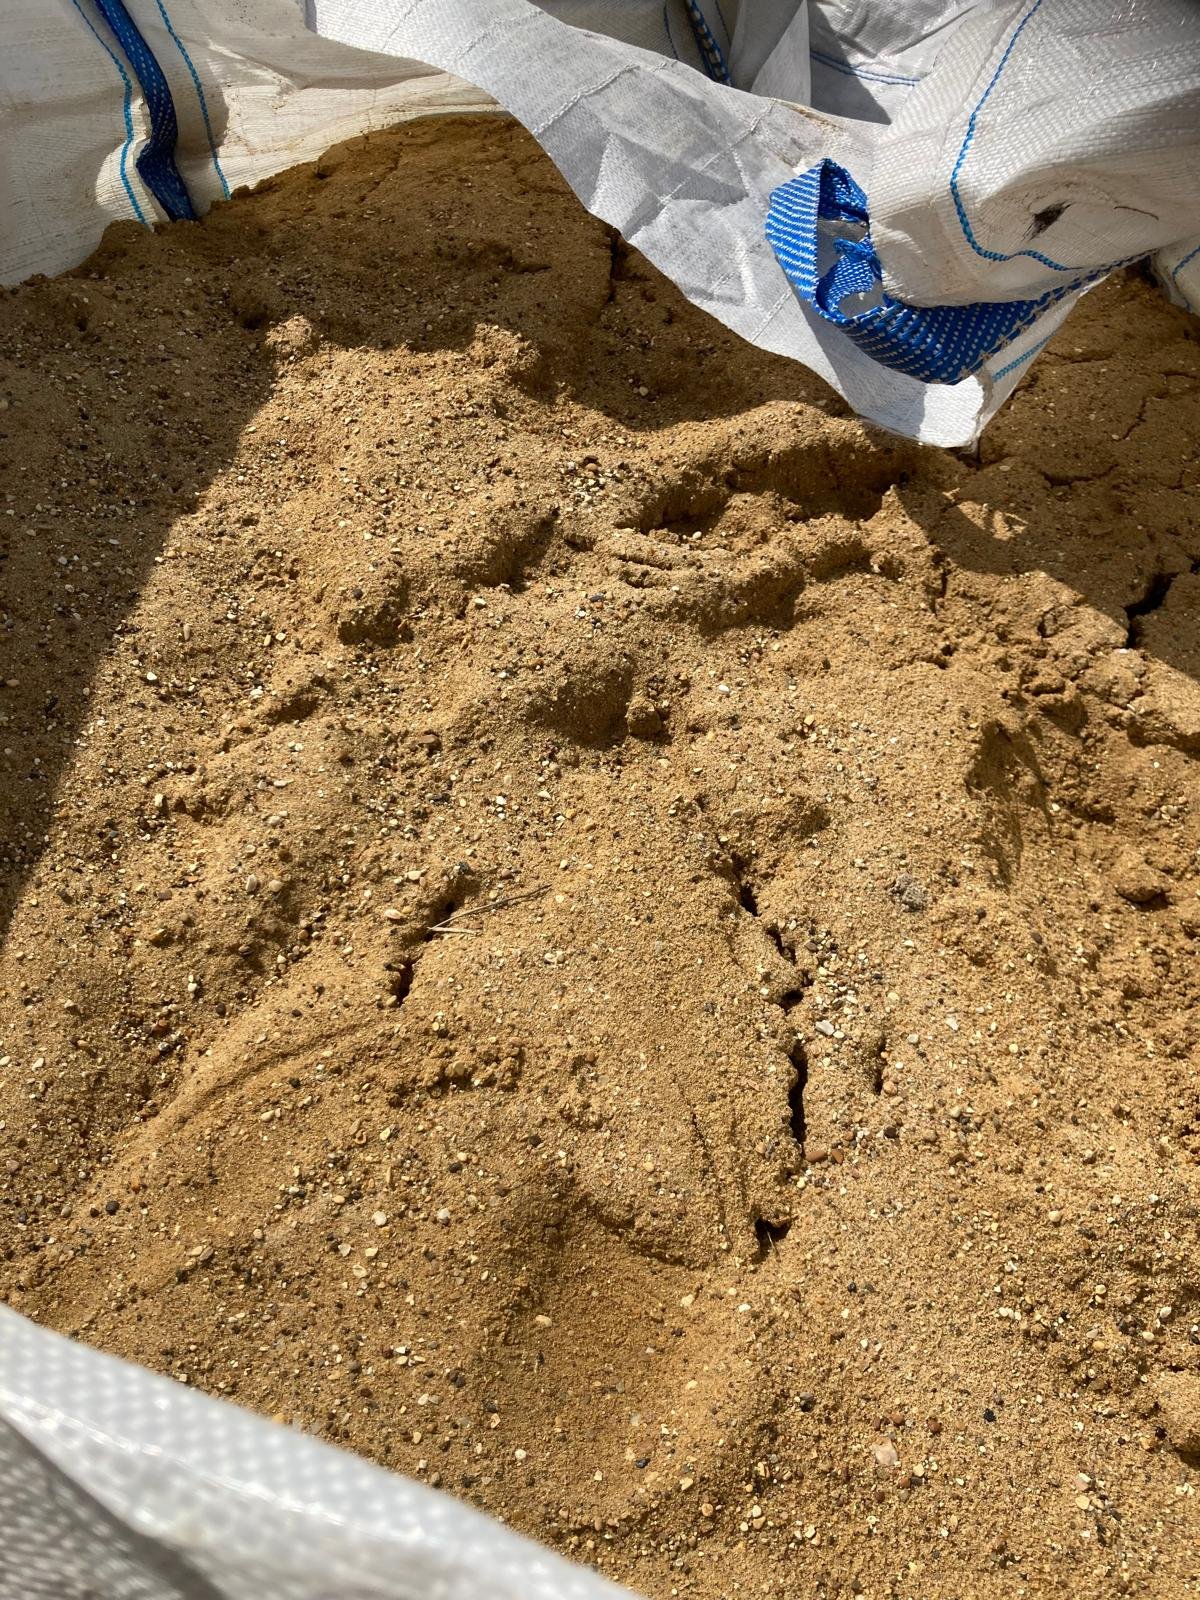 50:50 plastering sand